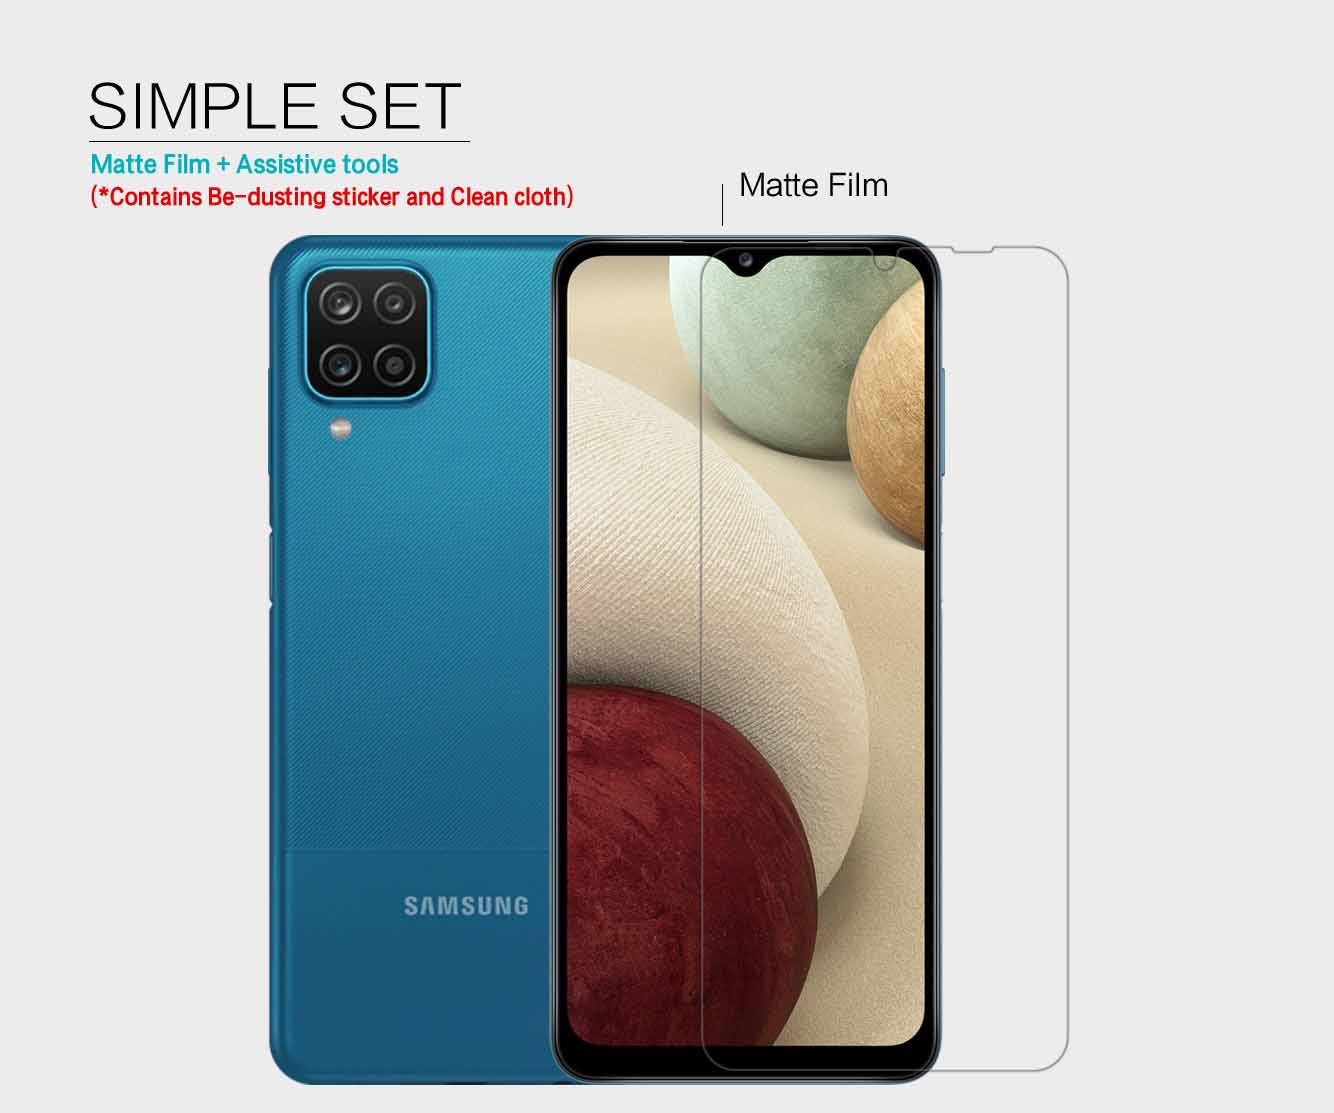 Samsung Galaxy A12/A32 5G screen protector